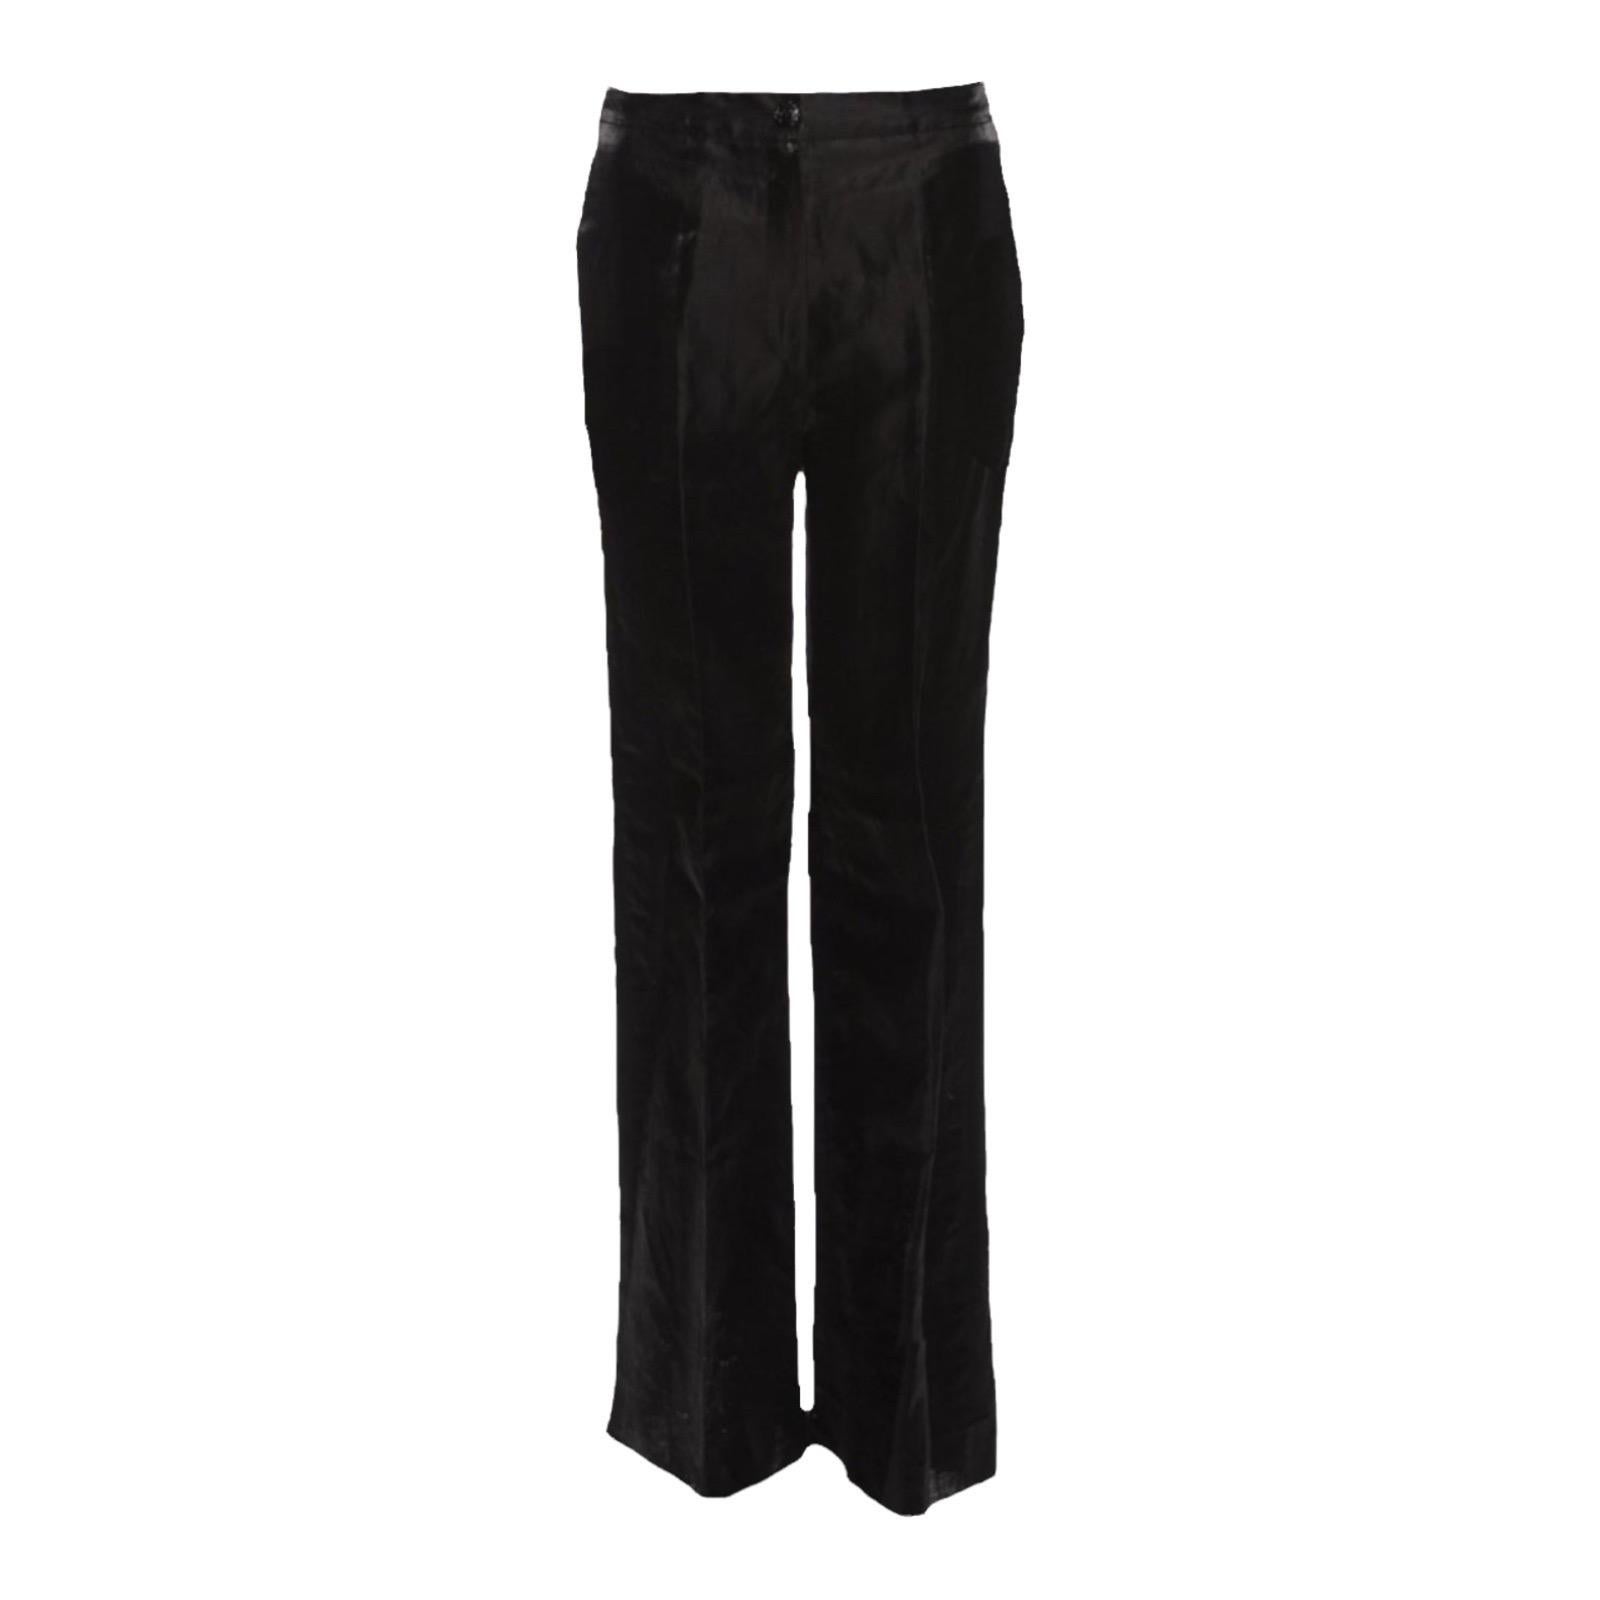 CHANEL Black Shimmering Evening Festive Pants Jacket Suit Tuxedo Smoking 42-44 For Sale 4